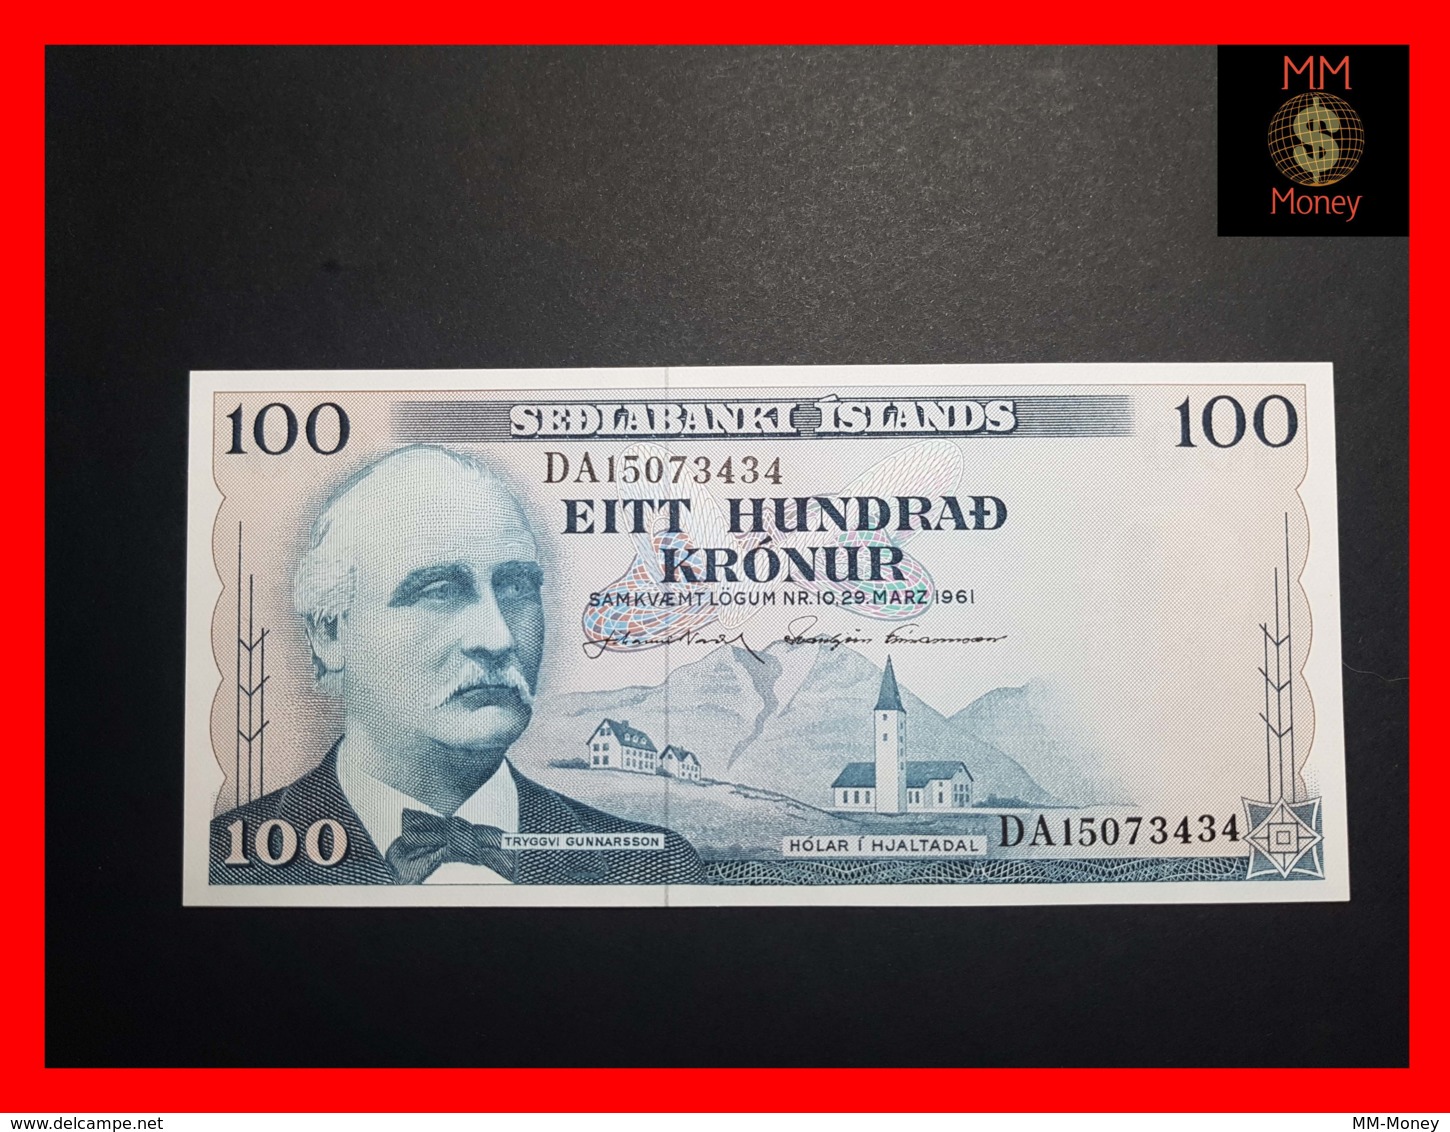 ICELAND 100 Kronur  L. 29.03.1961  P. 44  Issued 1965  UNC  [MM-Money] - Islanda